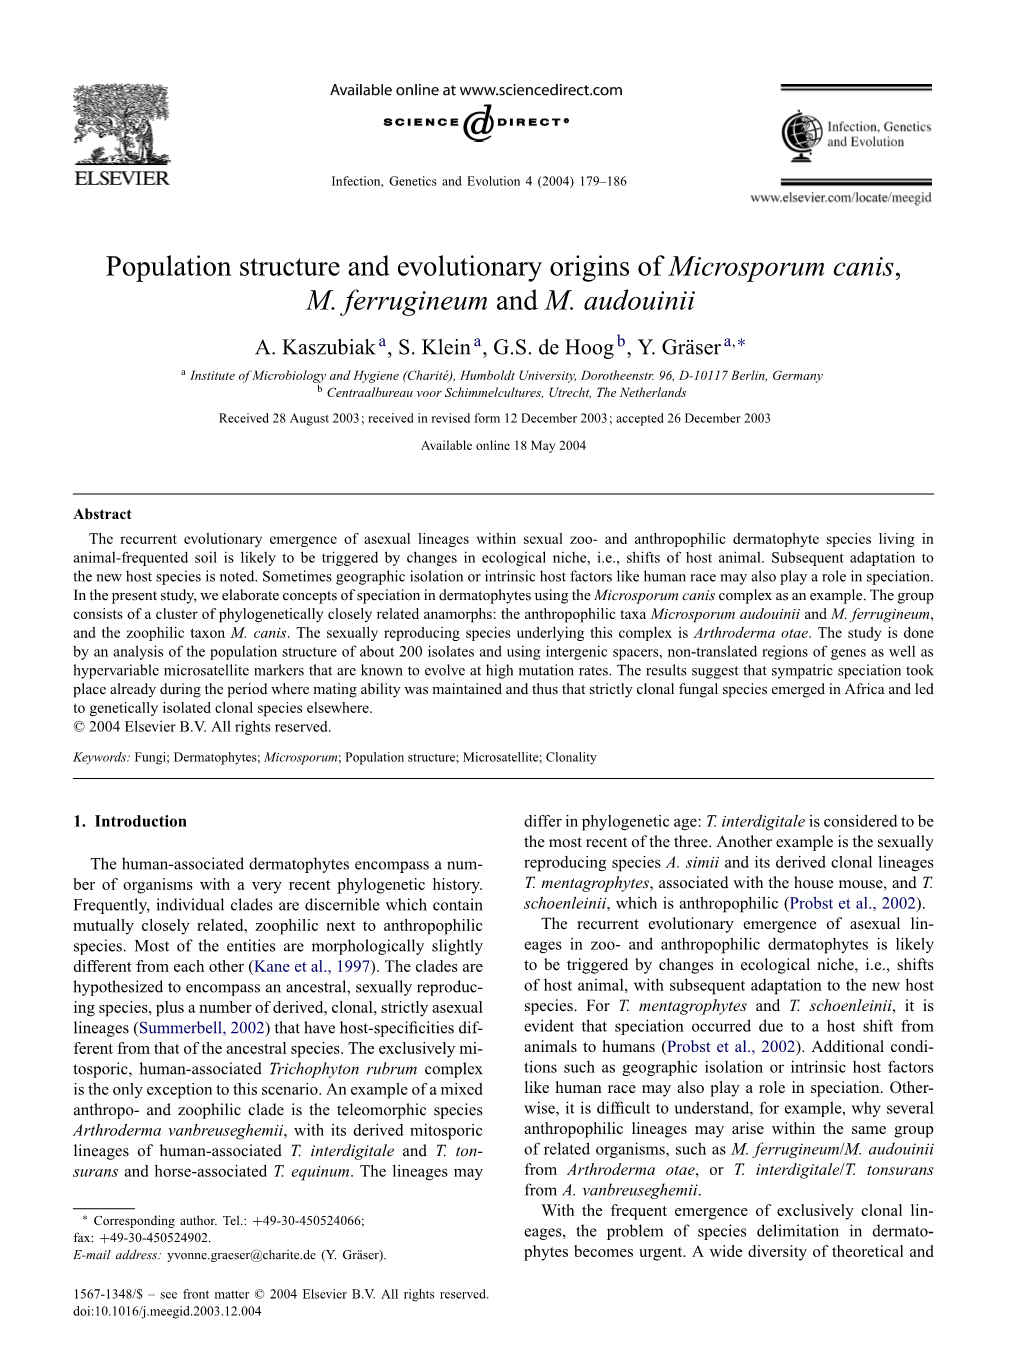 Population Structure and Evolutionary Origins of Microsporum Canis, M